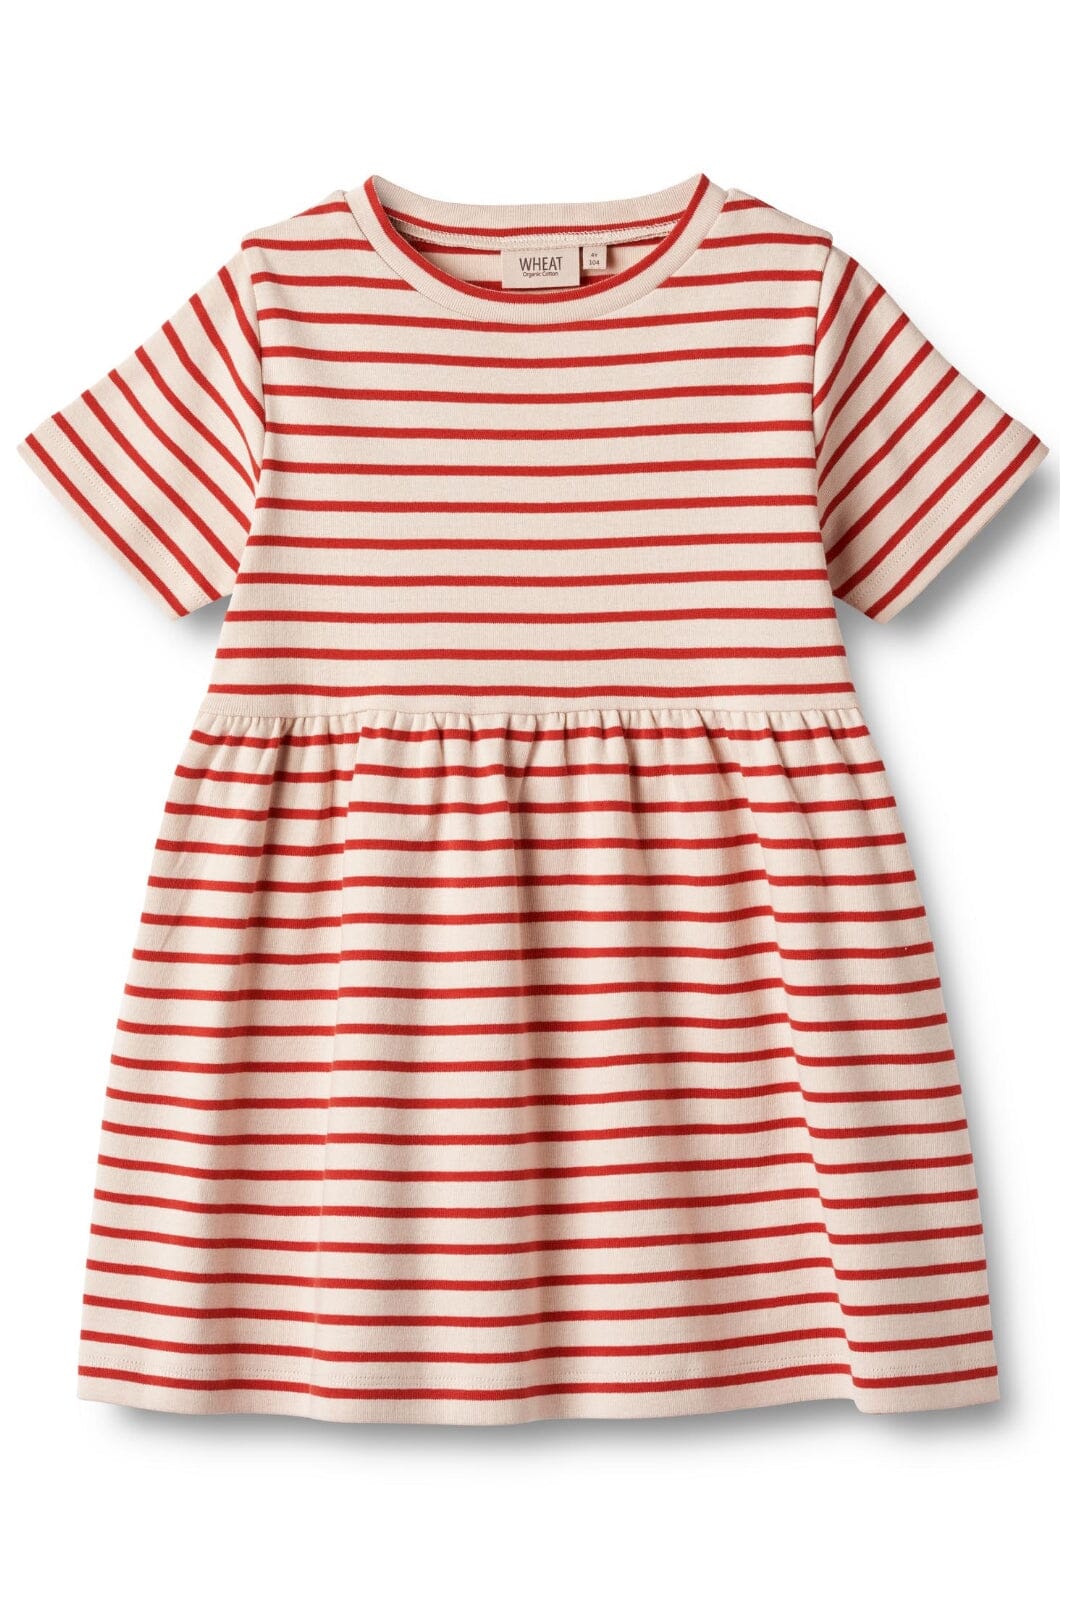 Wheat - Jersey Dress S/s Anna - 2078 Red Stripe Kjoler 